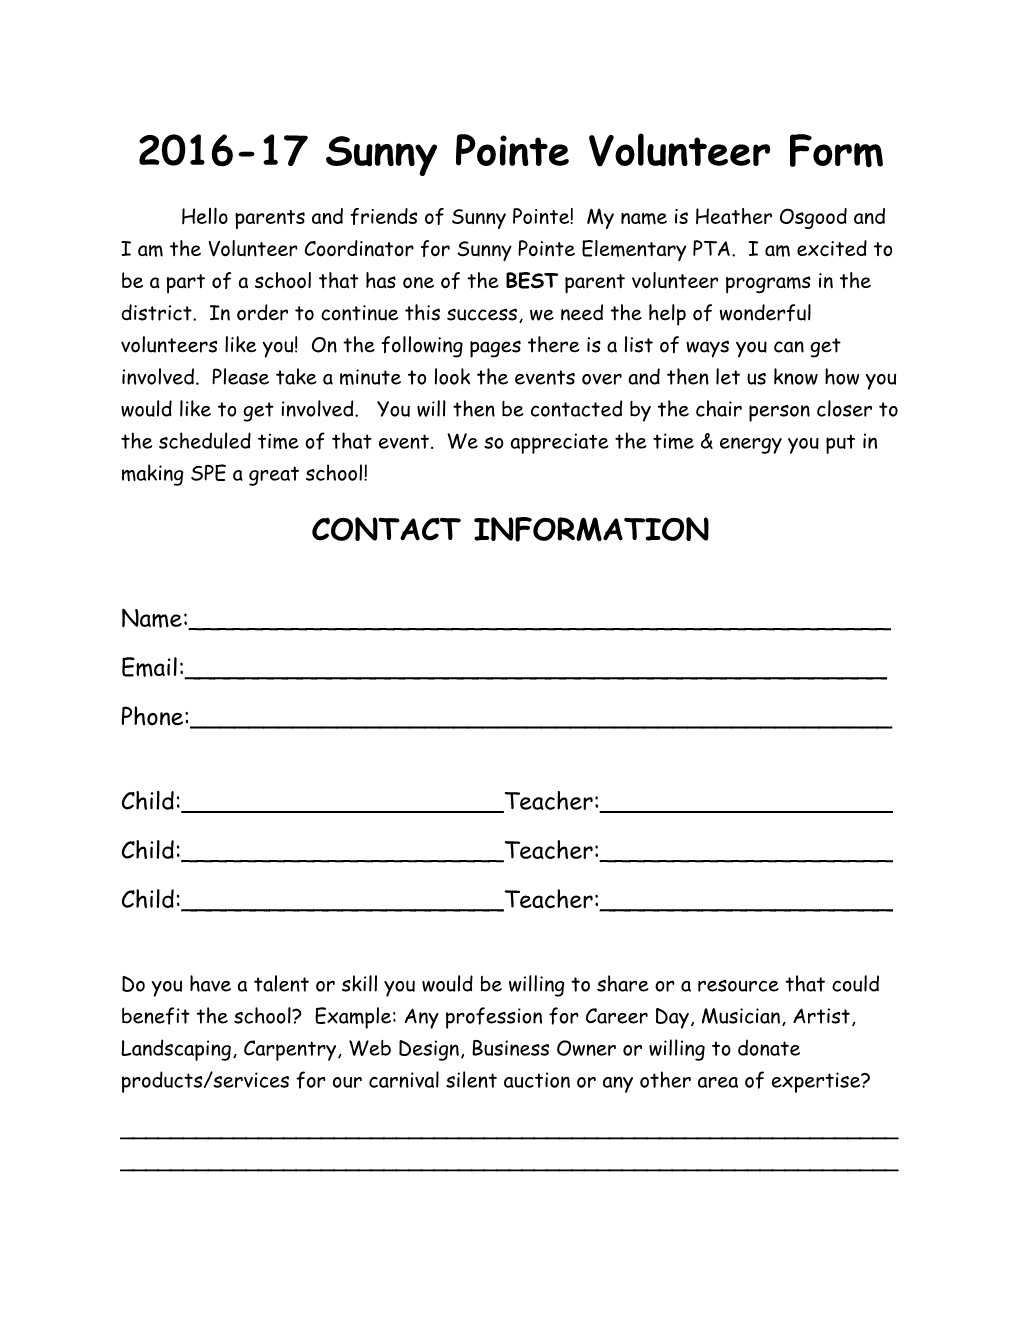 2016-17 Sunny Pointe Volunteer Form